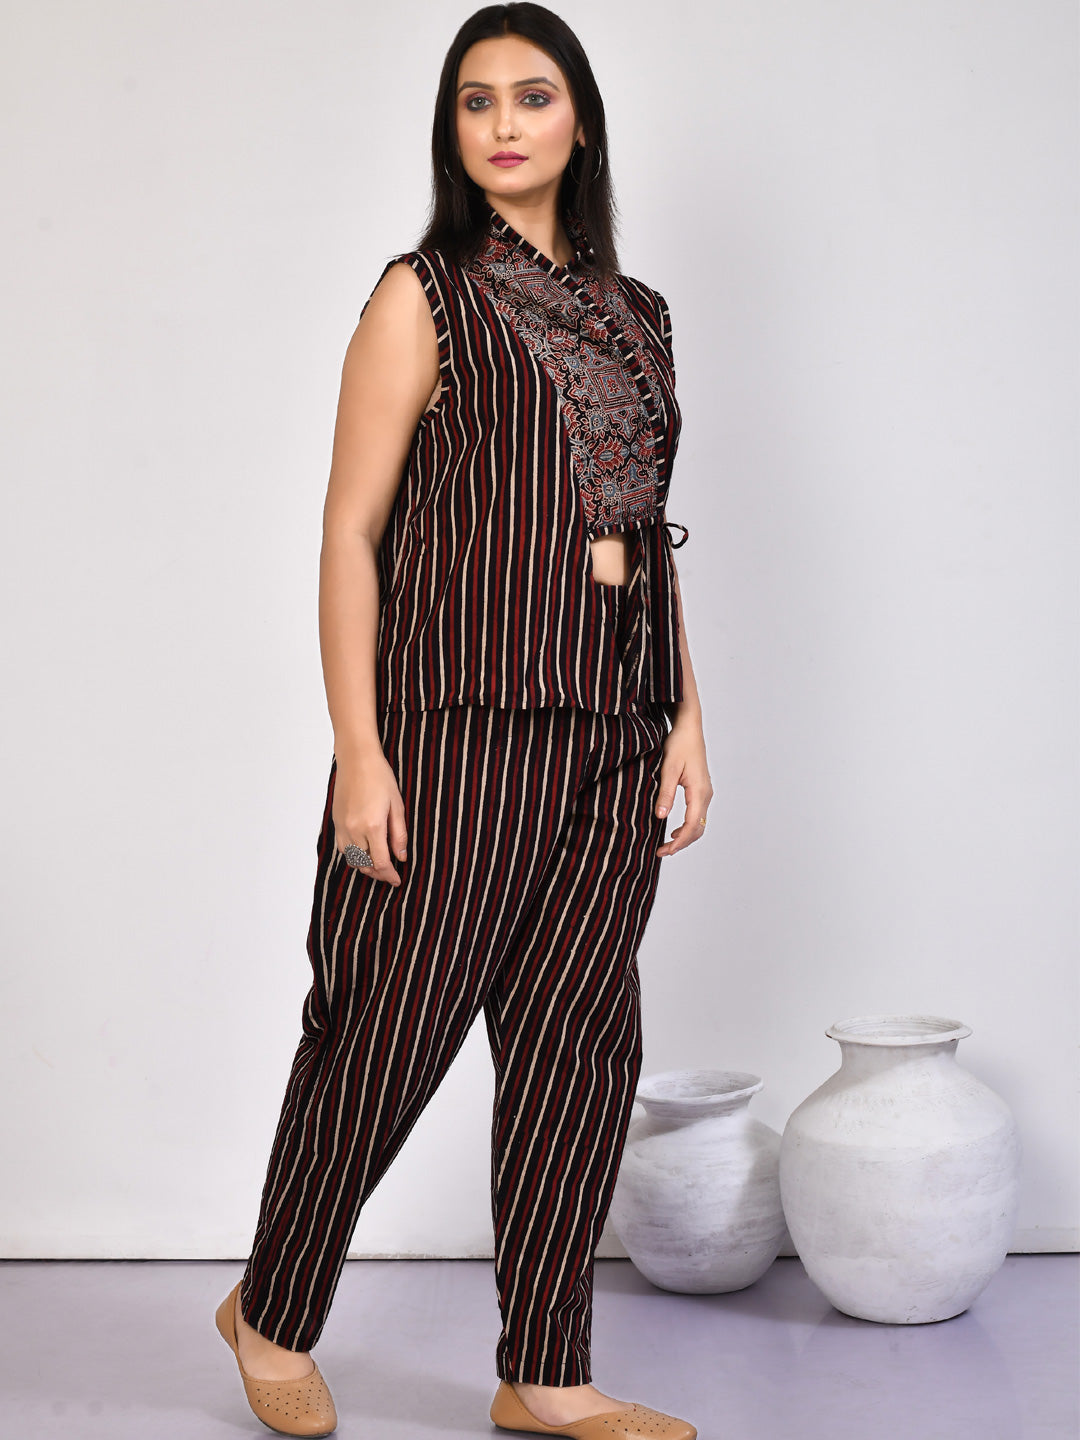 Bella Black handprinted Ajrakh Cotton Co-ord set for women, great holiday wear option!-5